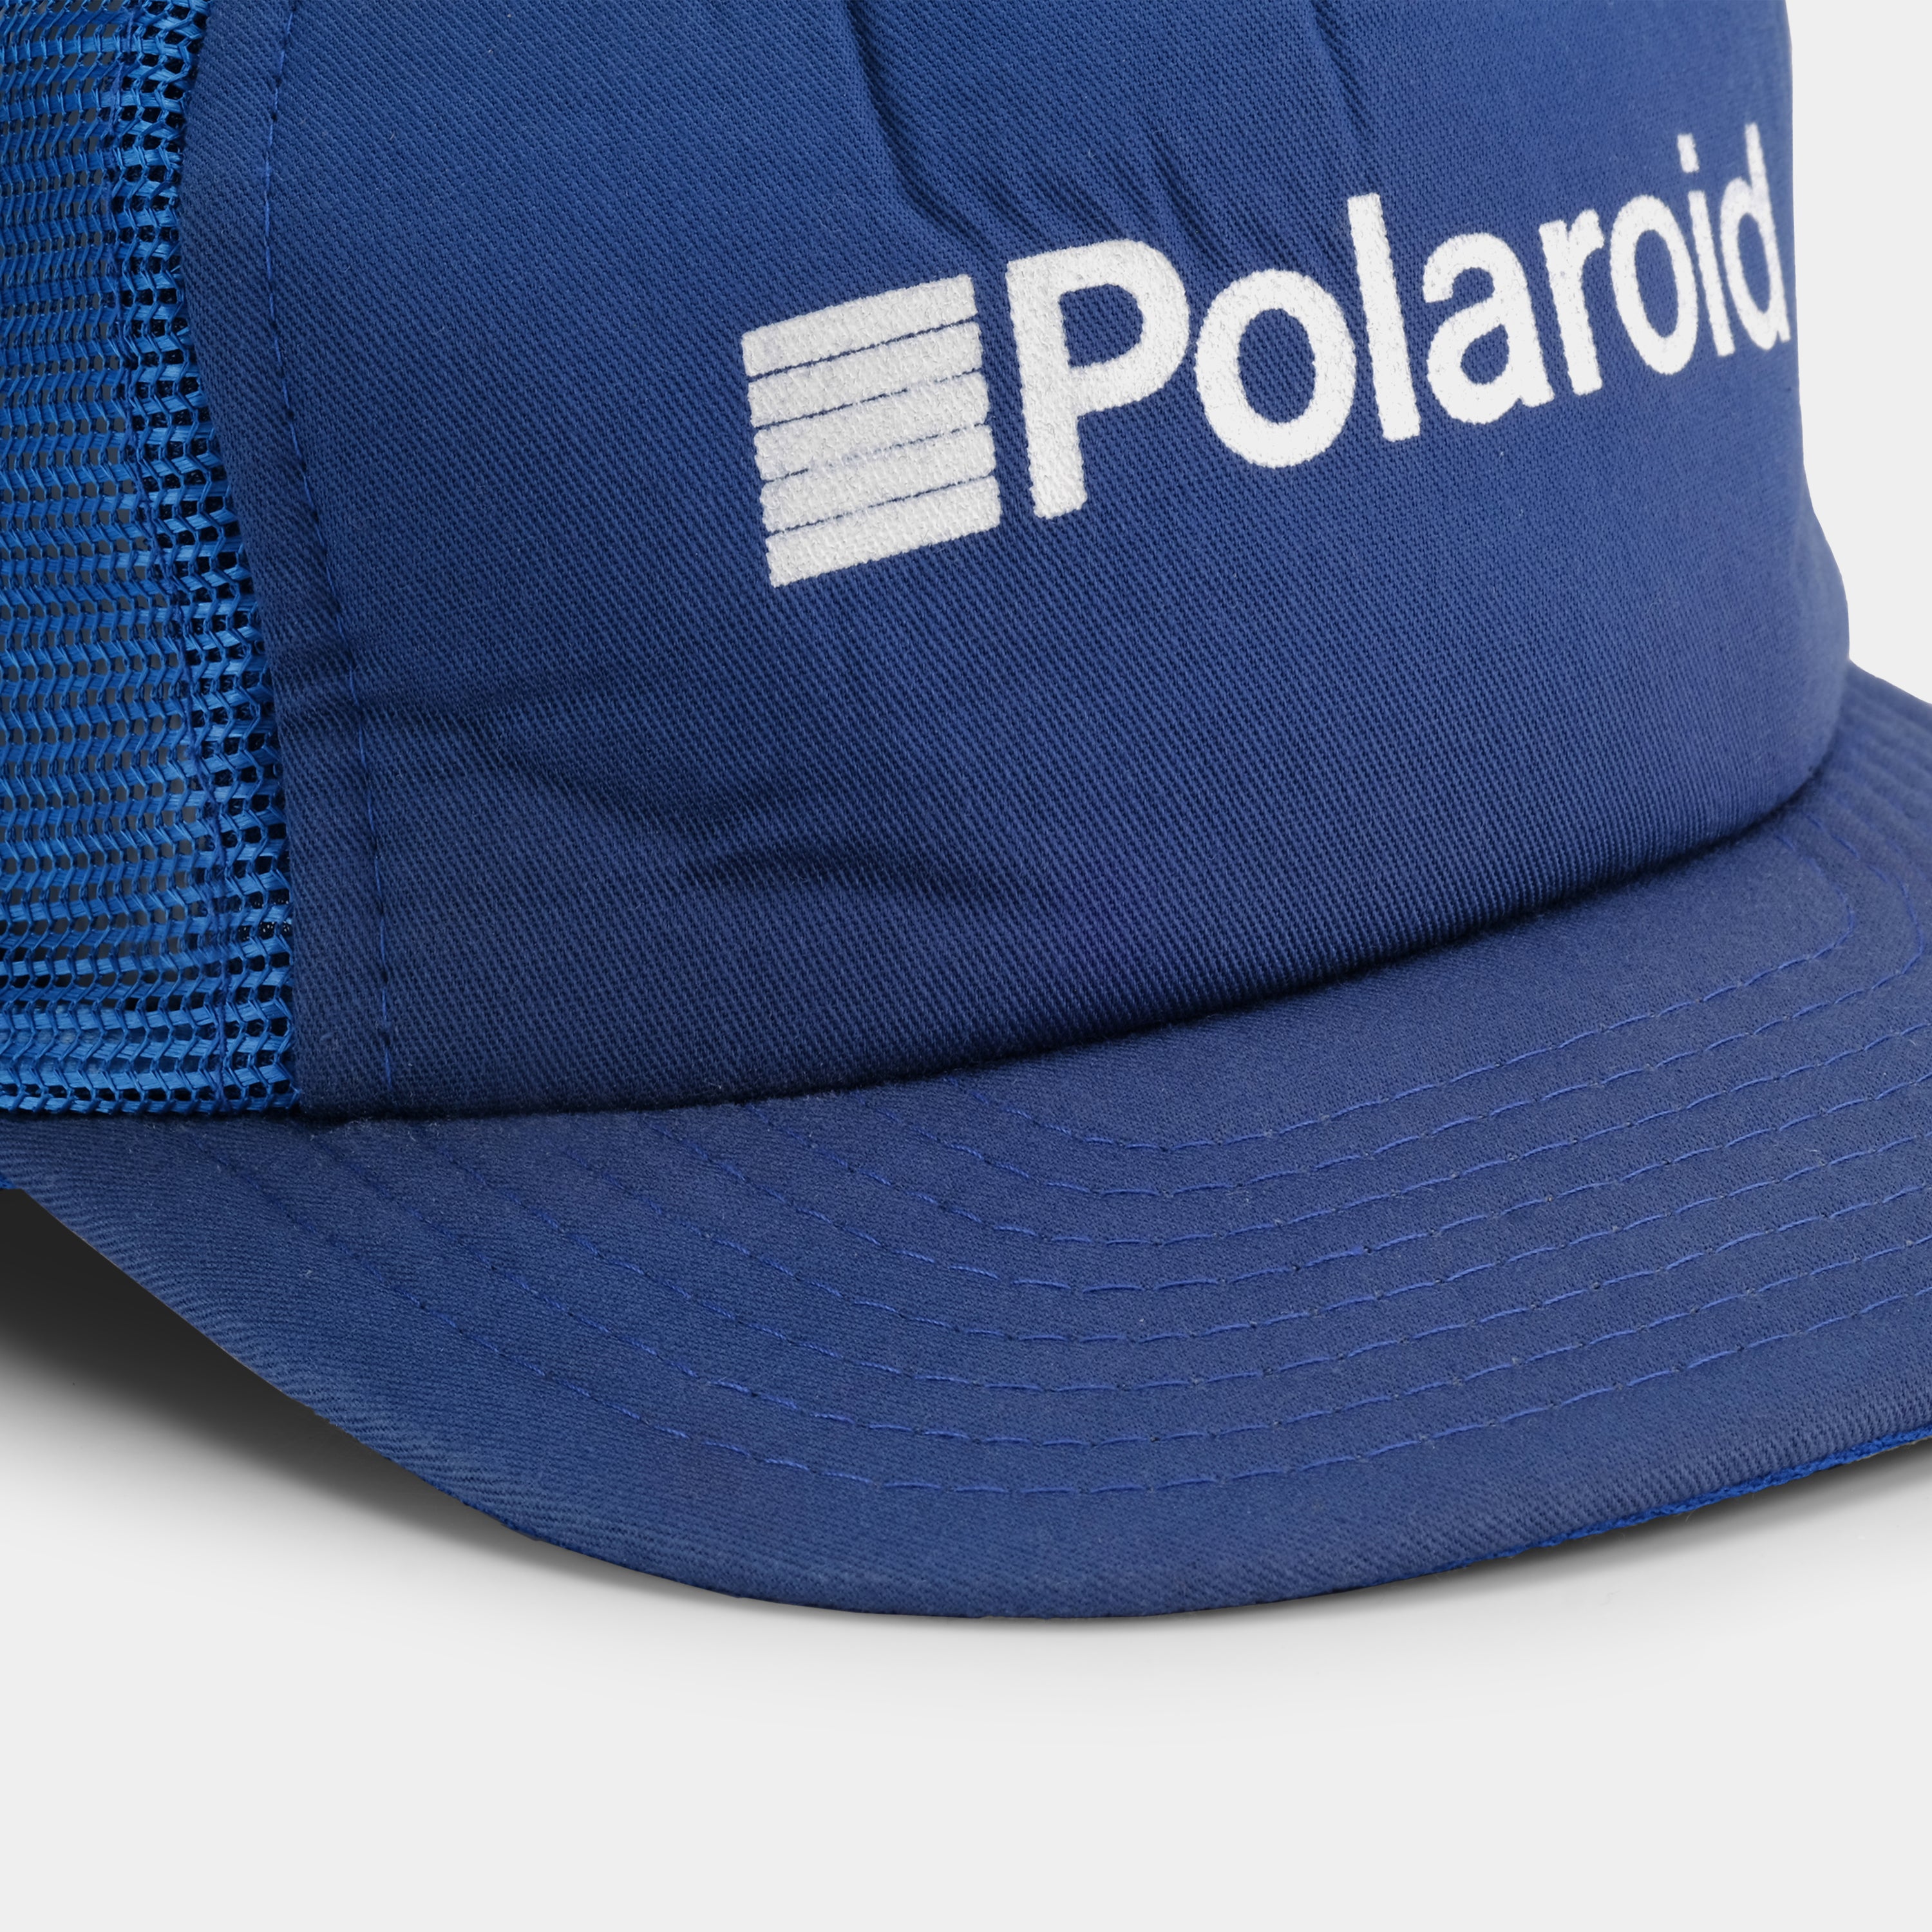 Vintage Polaroid Blue Cap